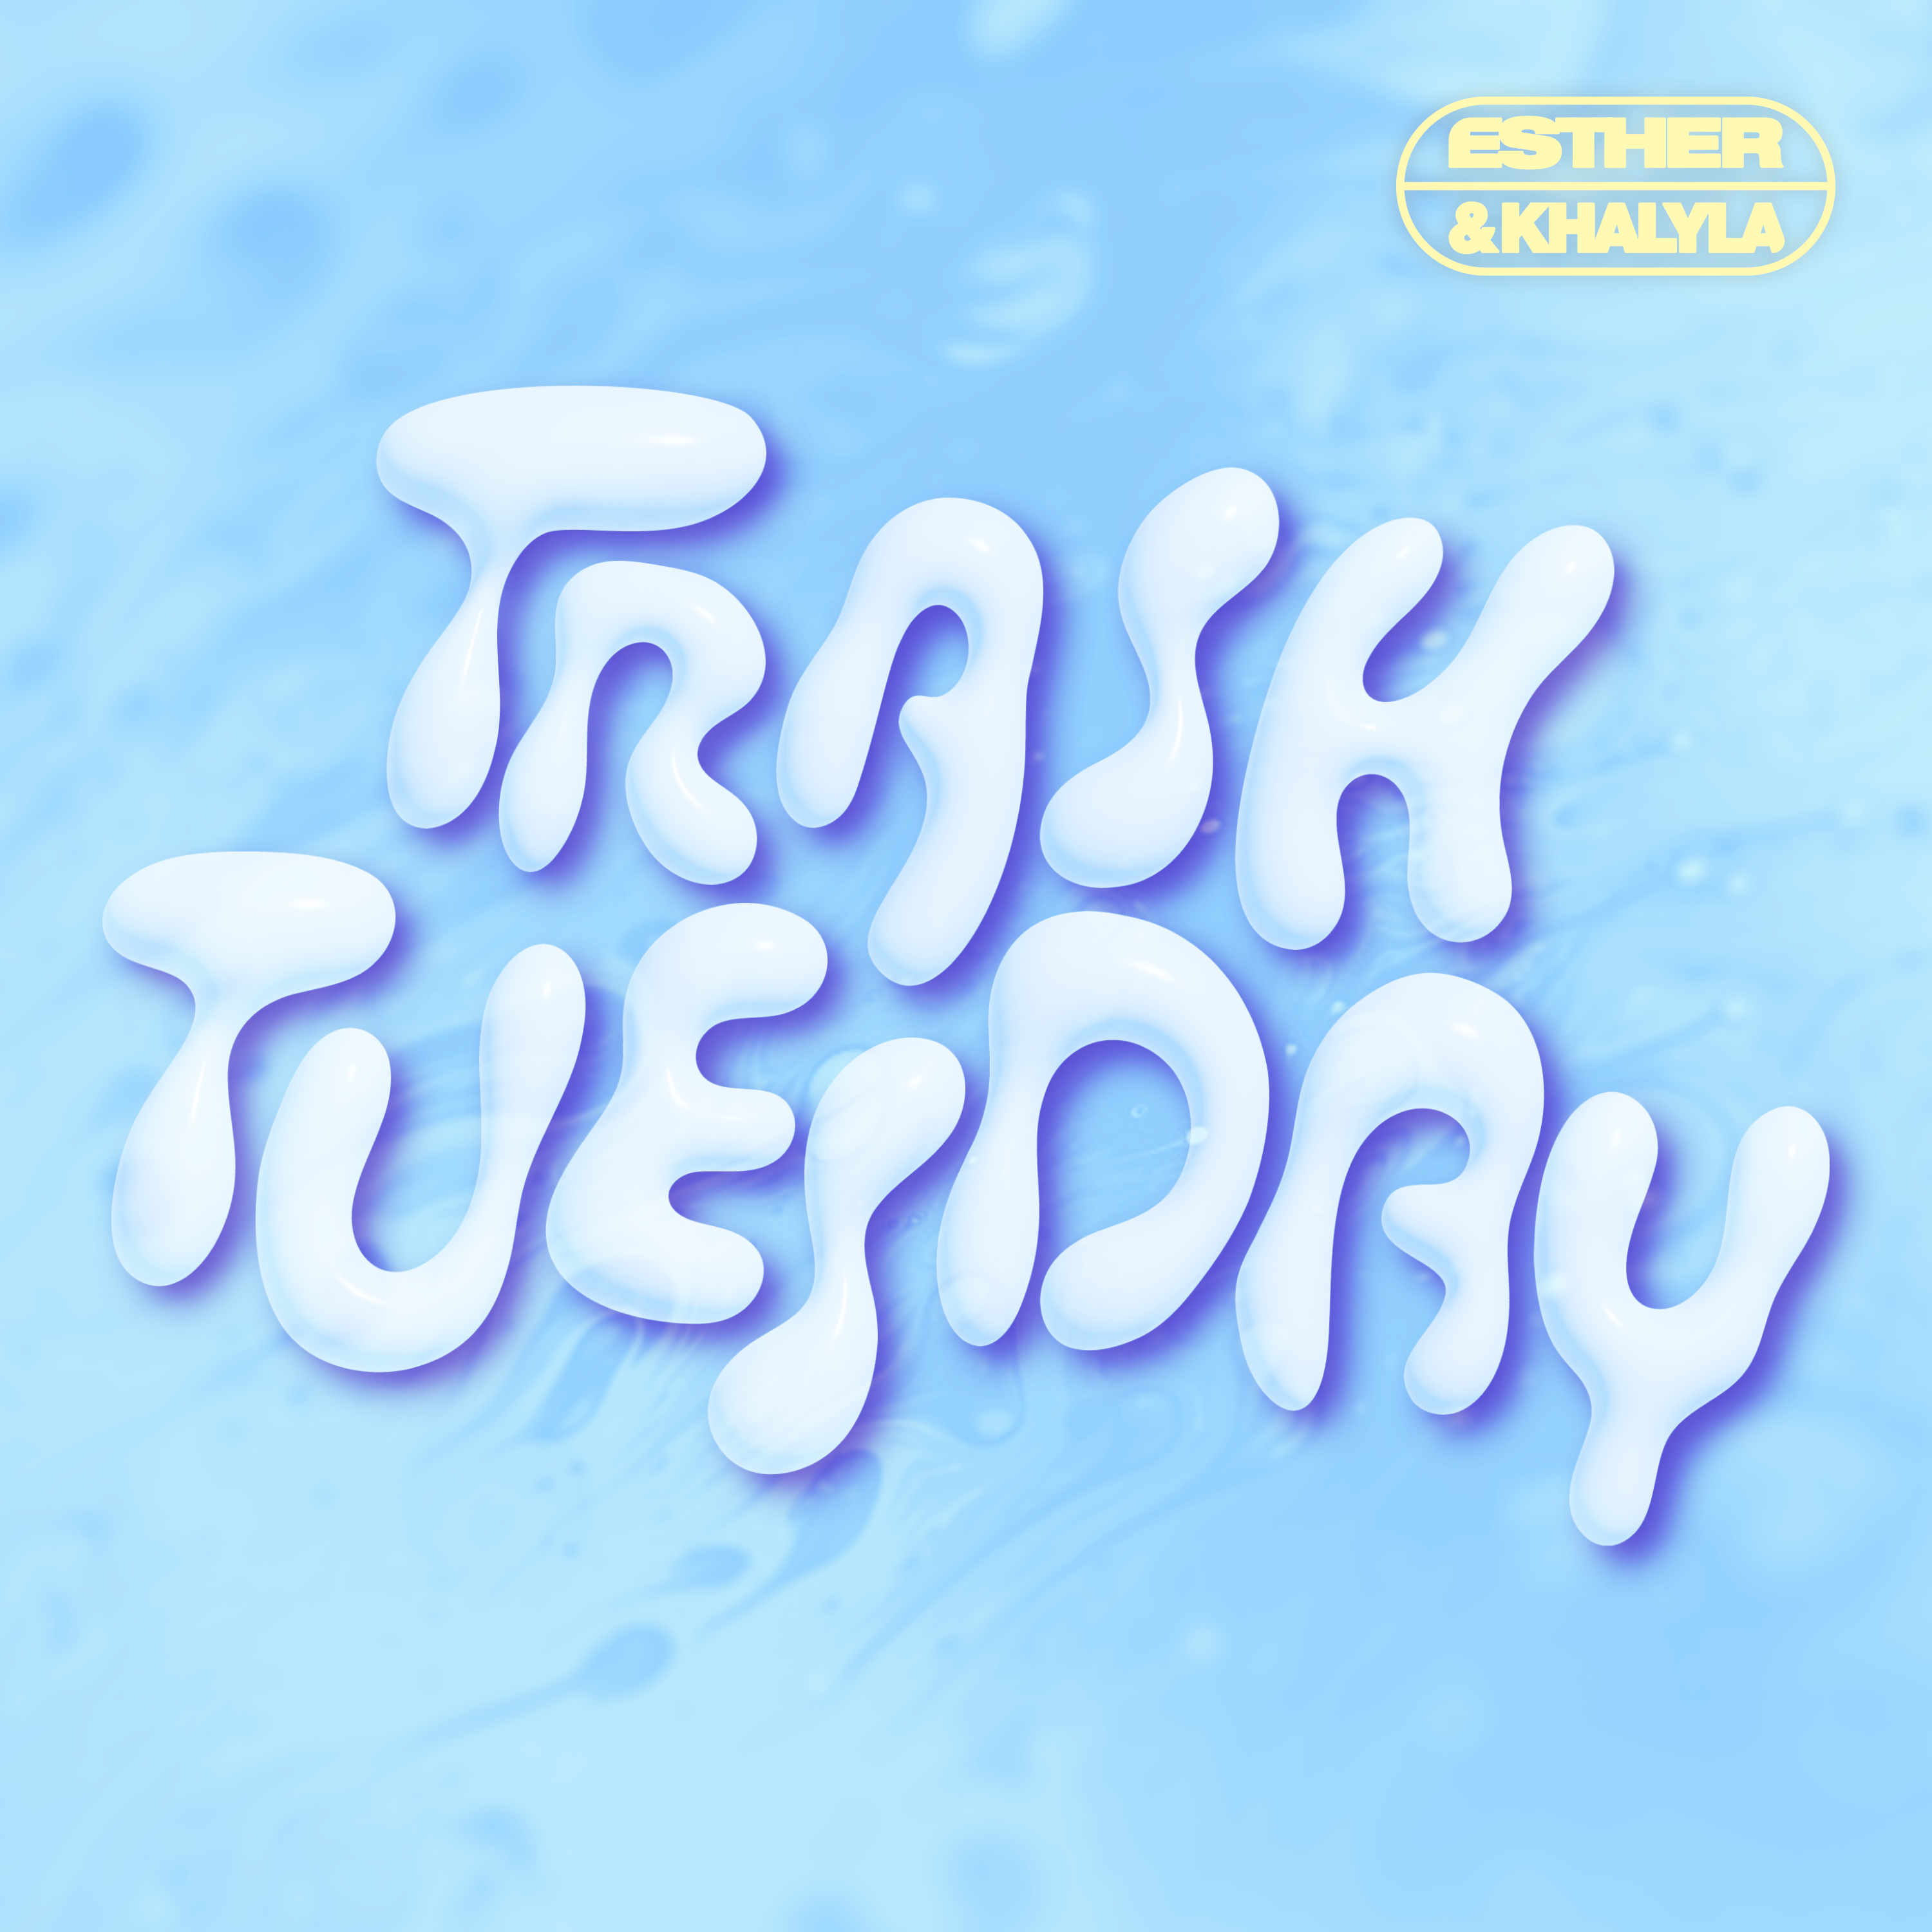 Trash Tuesday w/ Esther & Khalyla